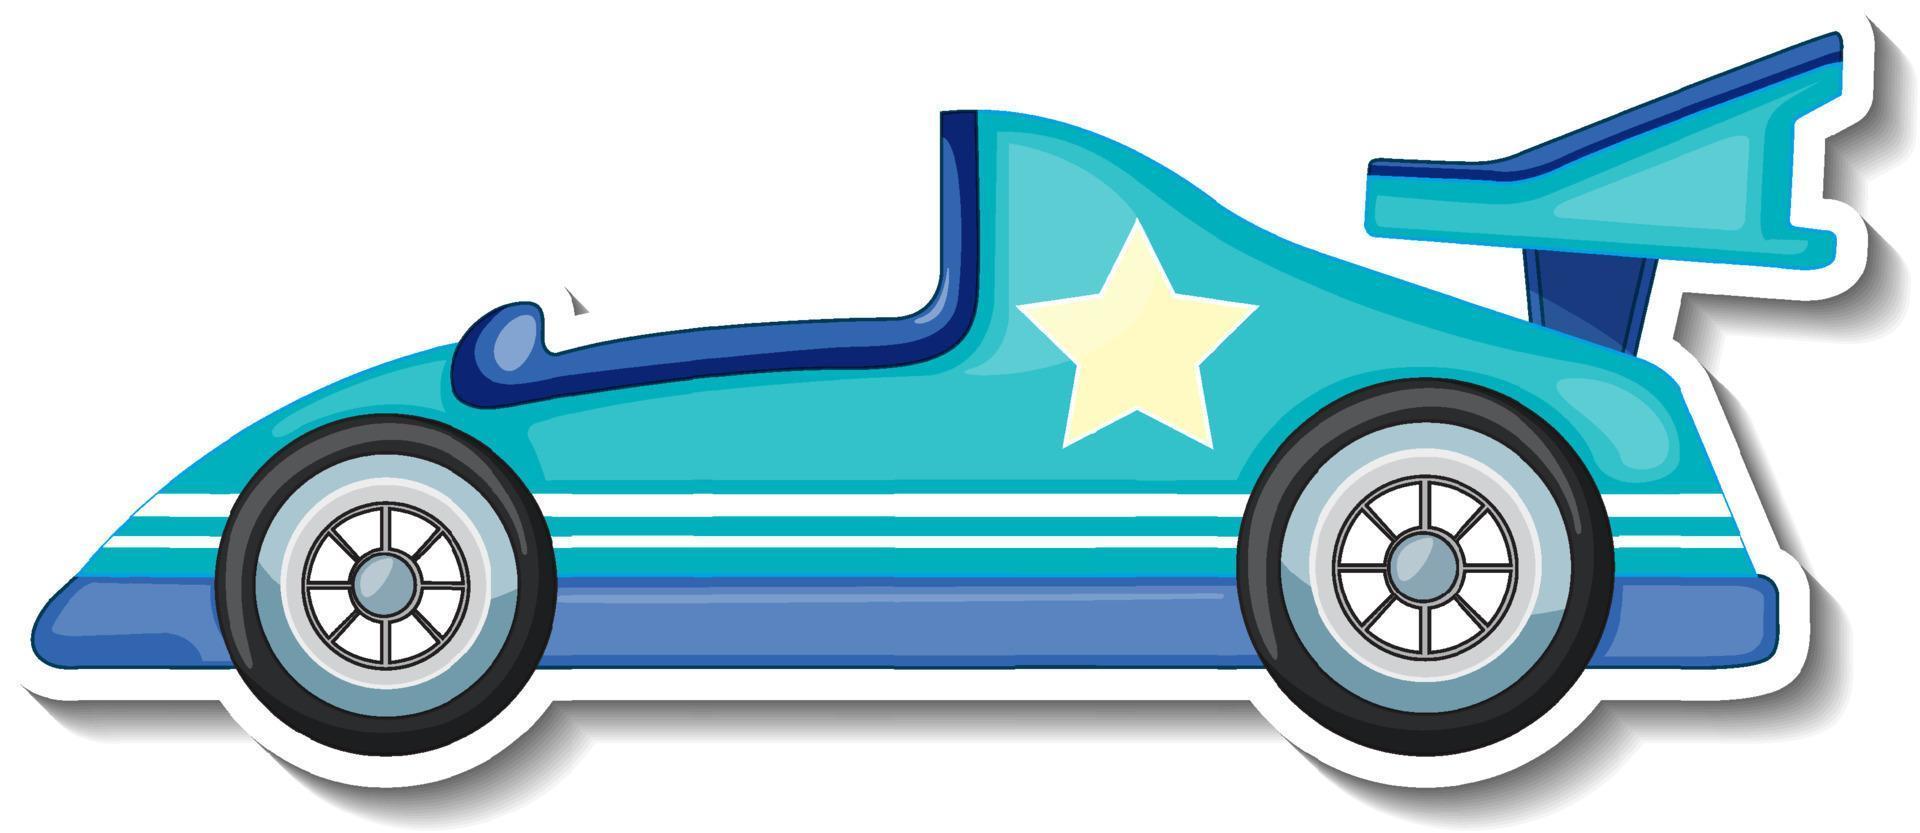 Car toy cartoon sticker on white background vector